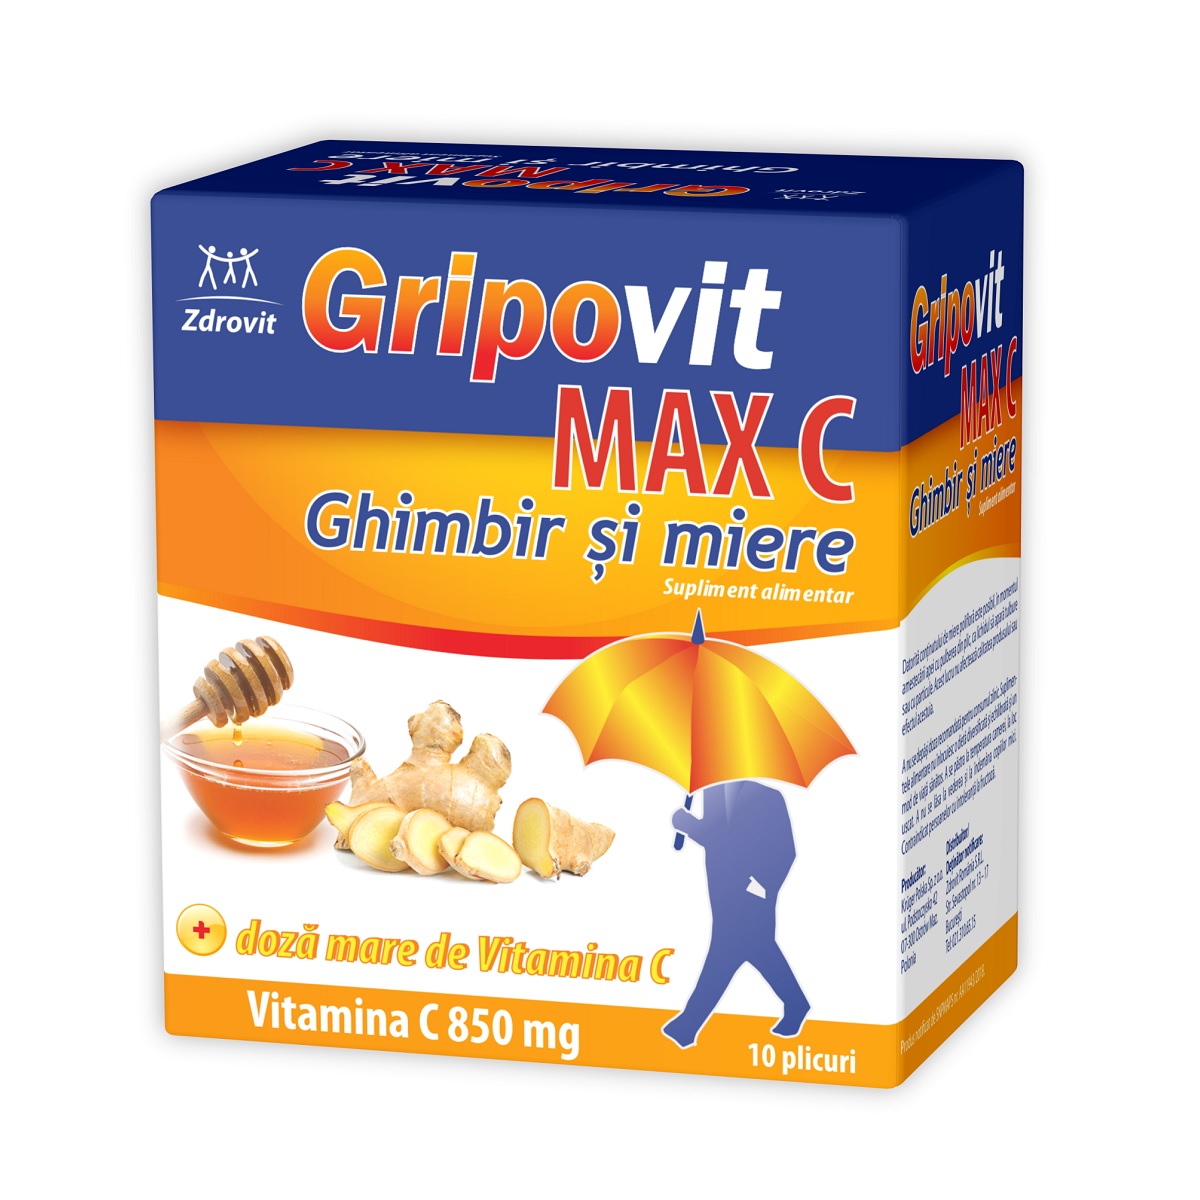 Imunitate - Gripovit Max C ghimbir si miere, 10 plicuri, Zdrovit, nordpharm.ro